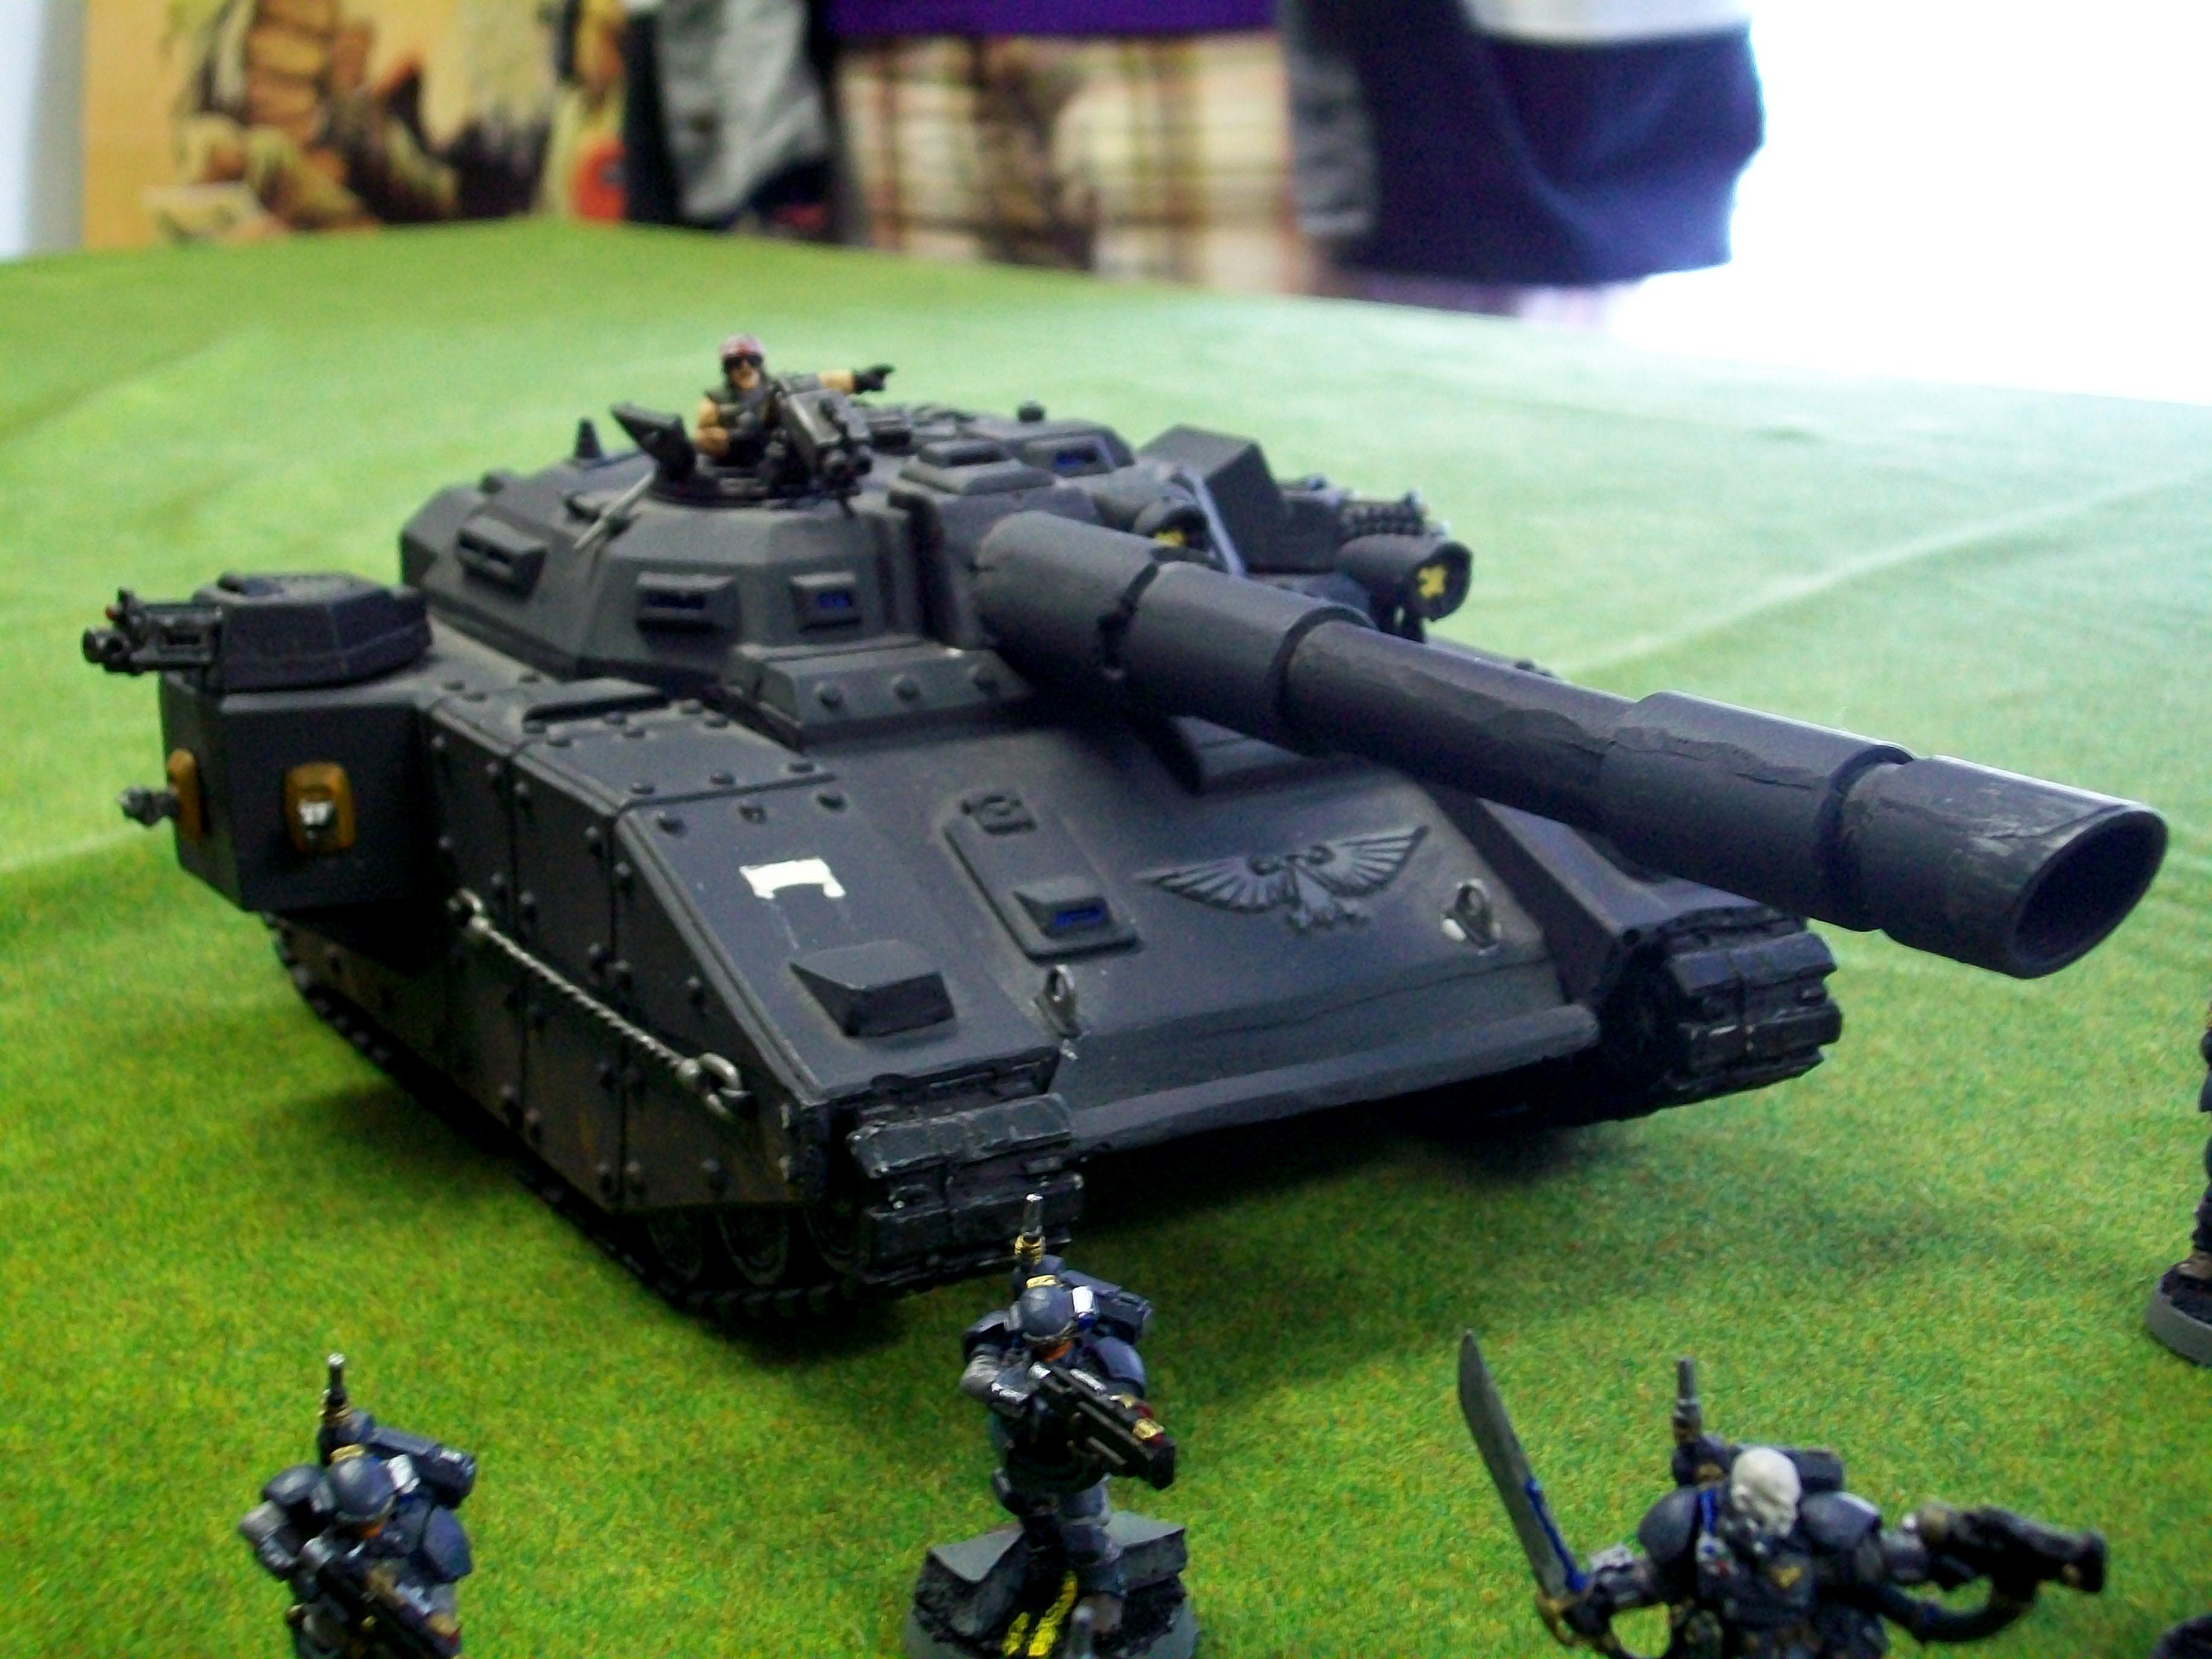 Shadowsword Super heavy tank